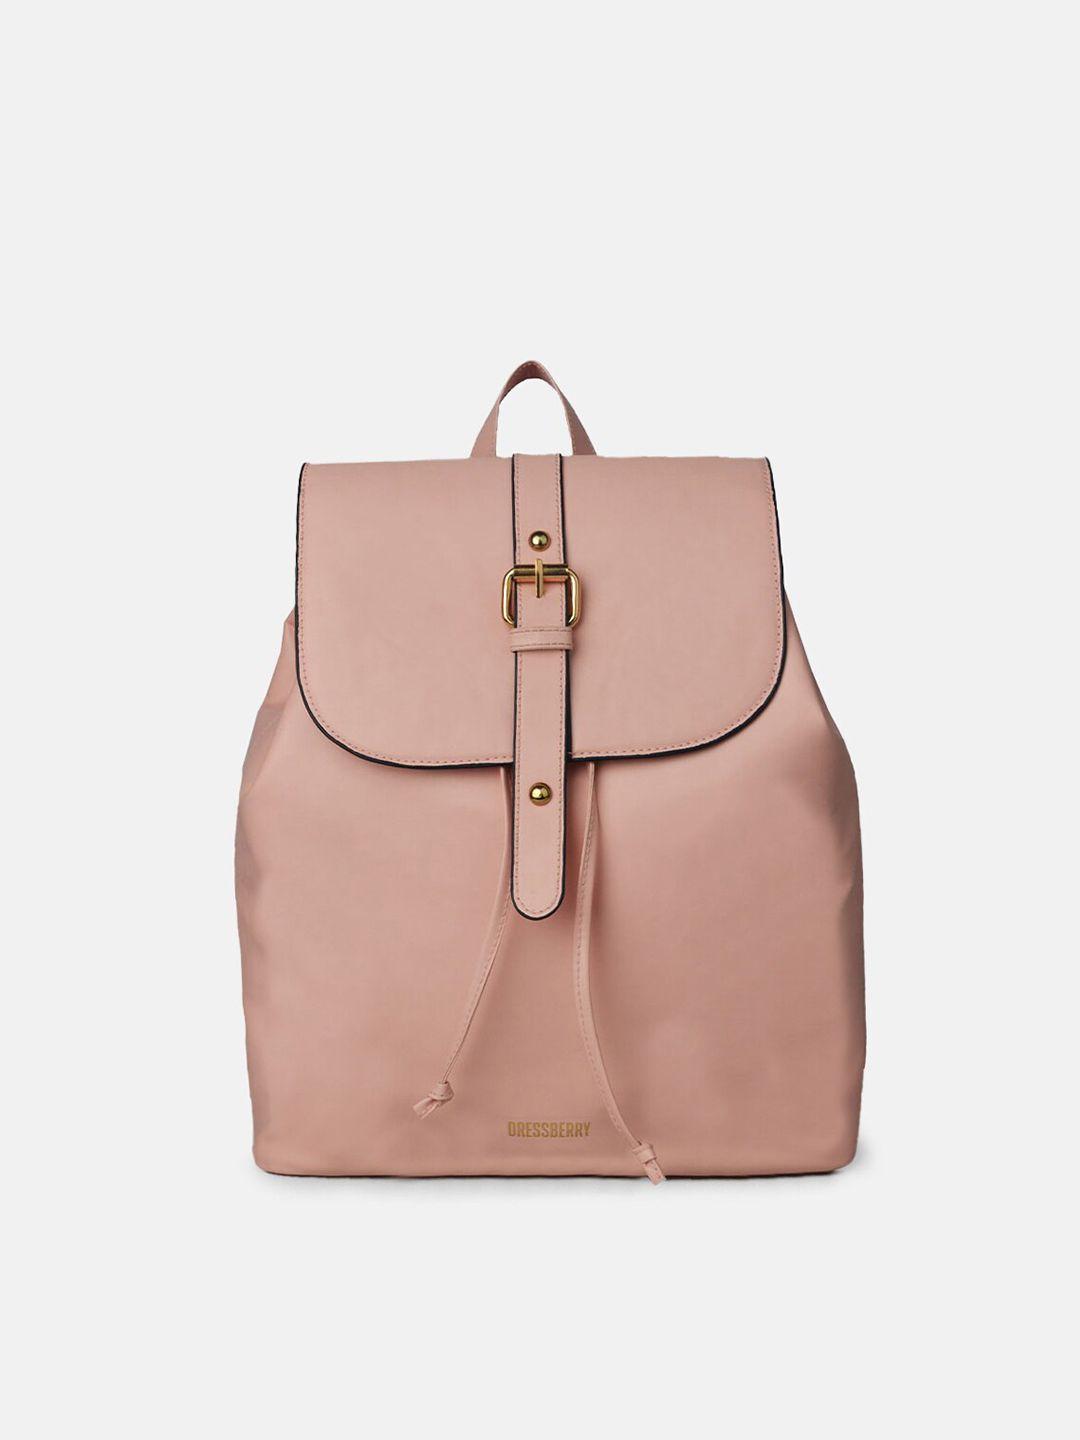 dressberry-women-pink-backpack